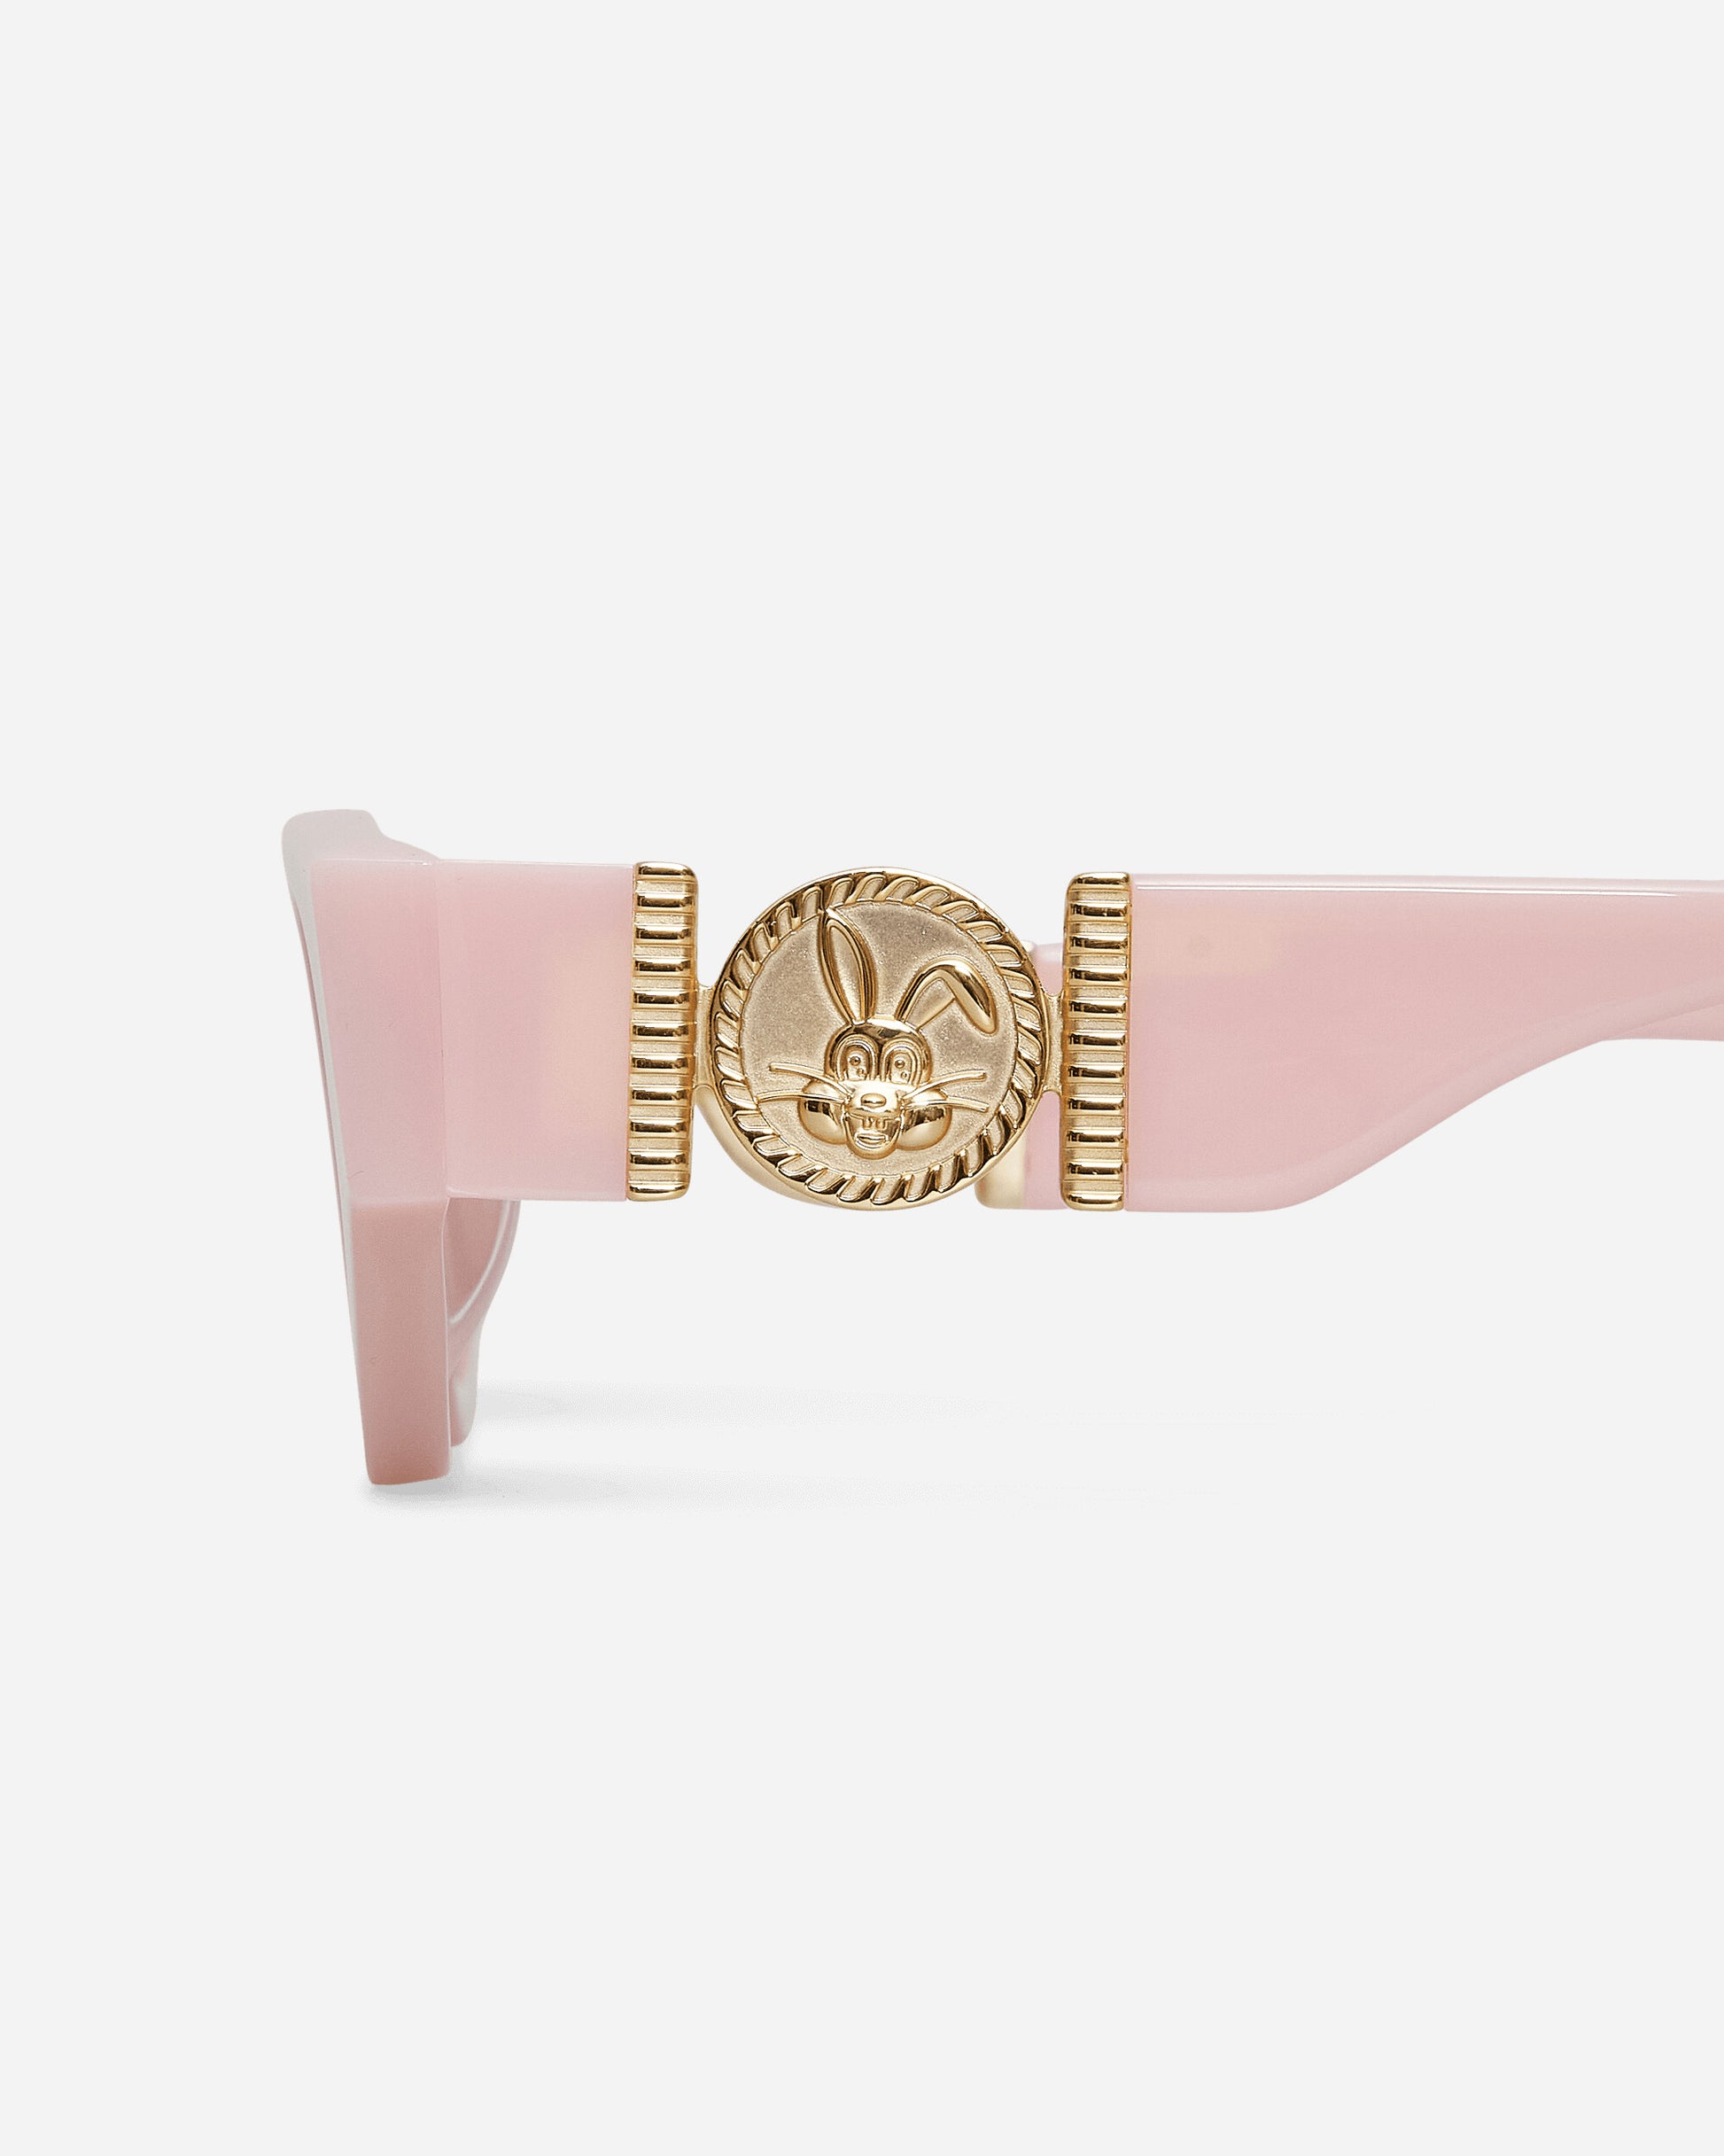 AKILA Vertigo X Freddie Gibbs Pink Eyewear Sunglasses 210367 67FG